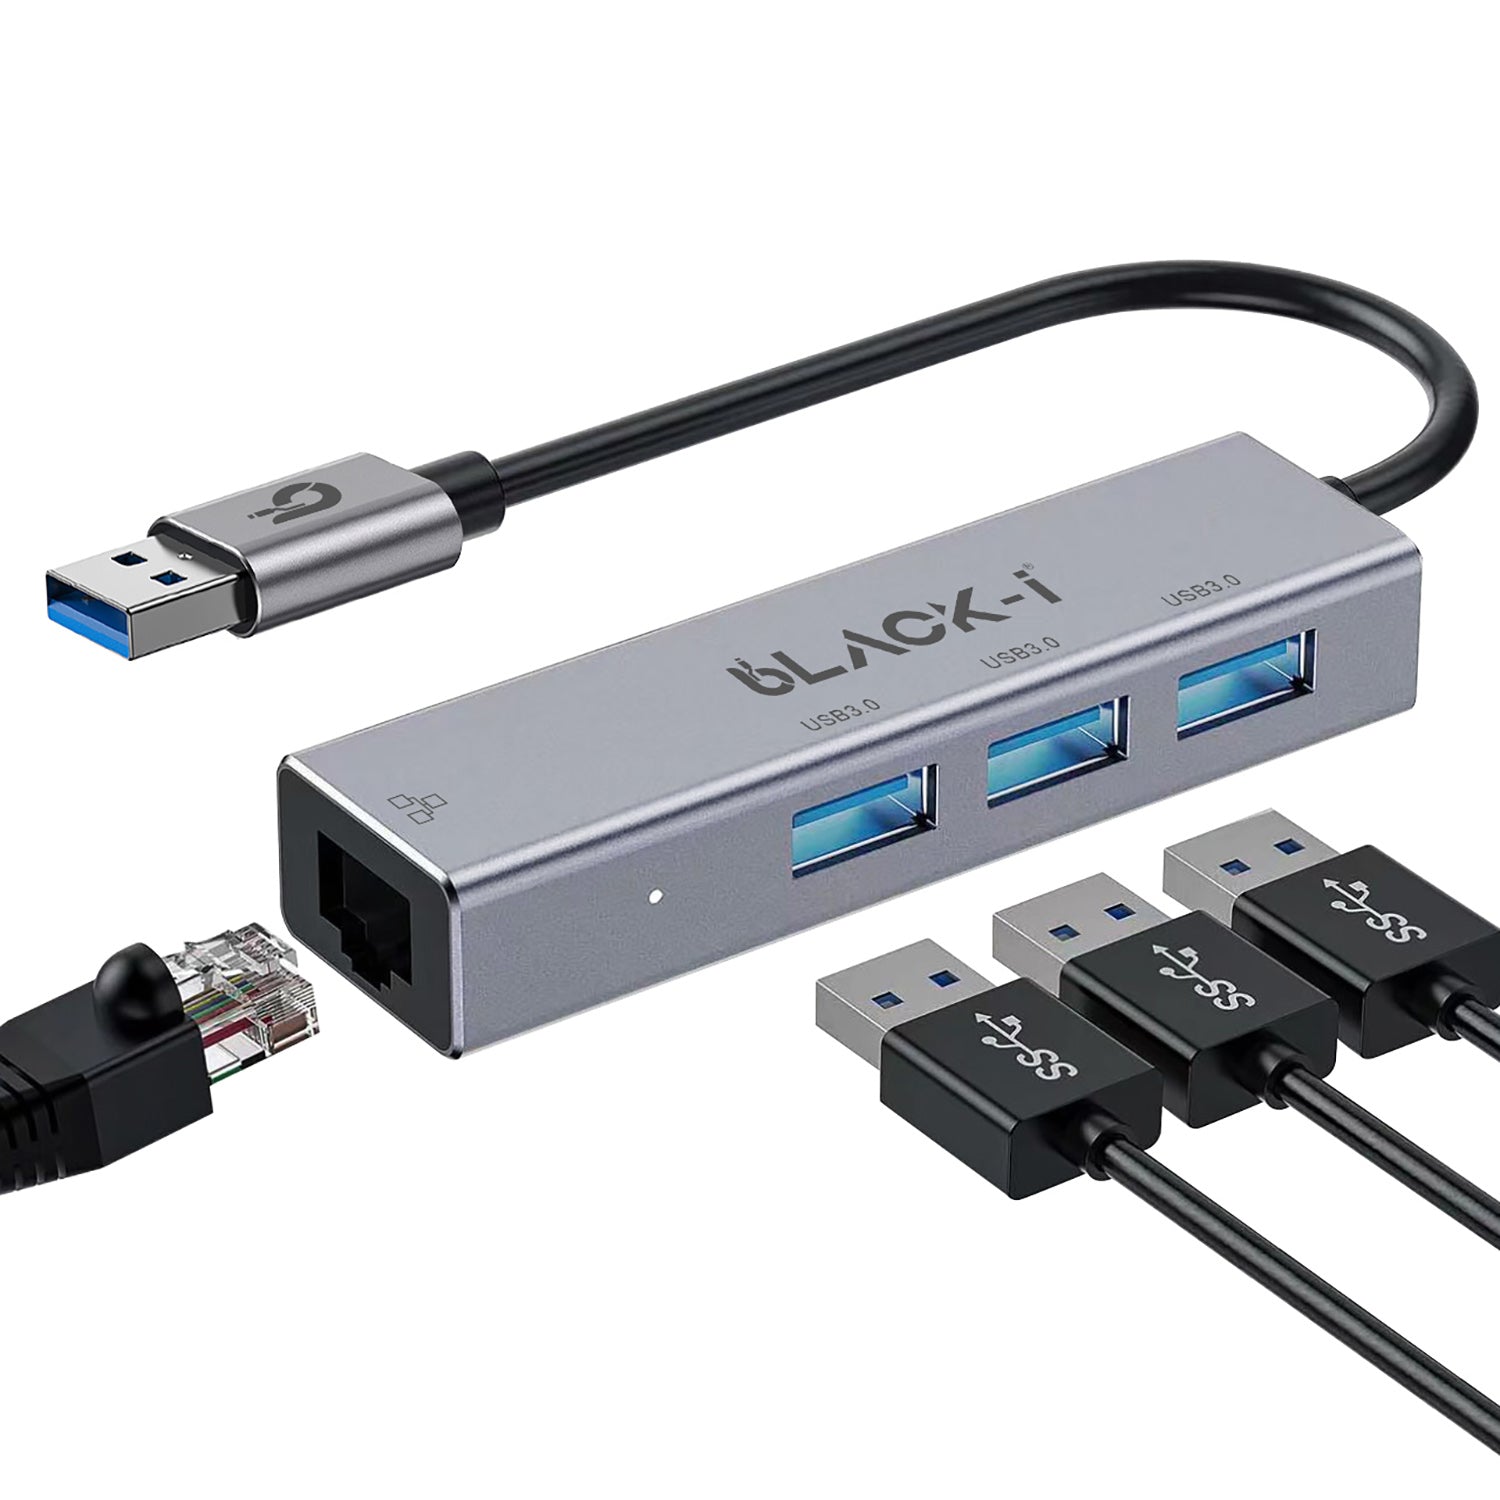 Black-i USB 3.0 to Gigabit LAN with 3*USB 3.0 Hub – Swift Network Connectivity and Versatile USB Hub for Seamless Data Transfer